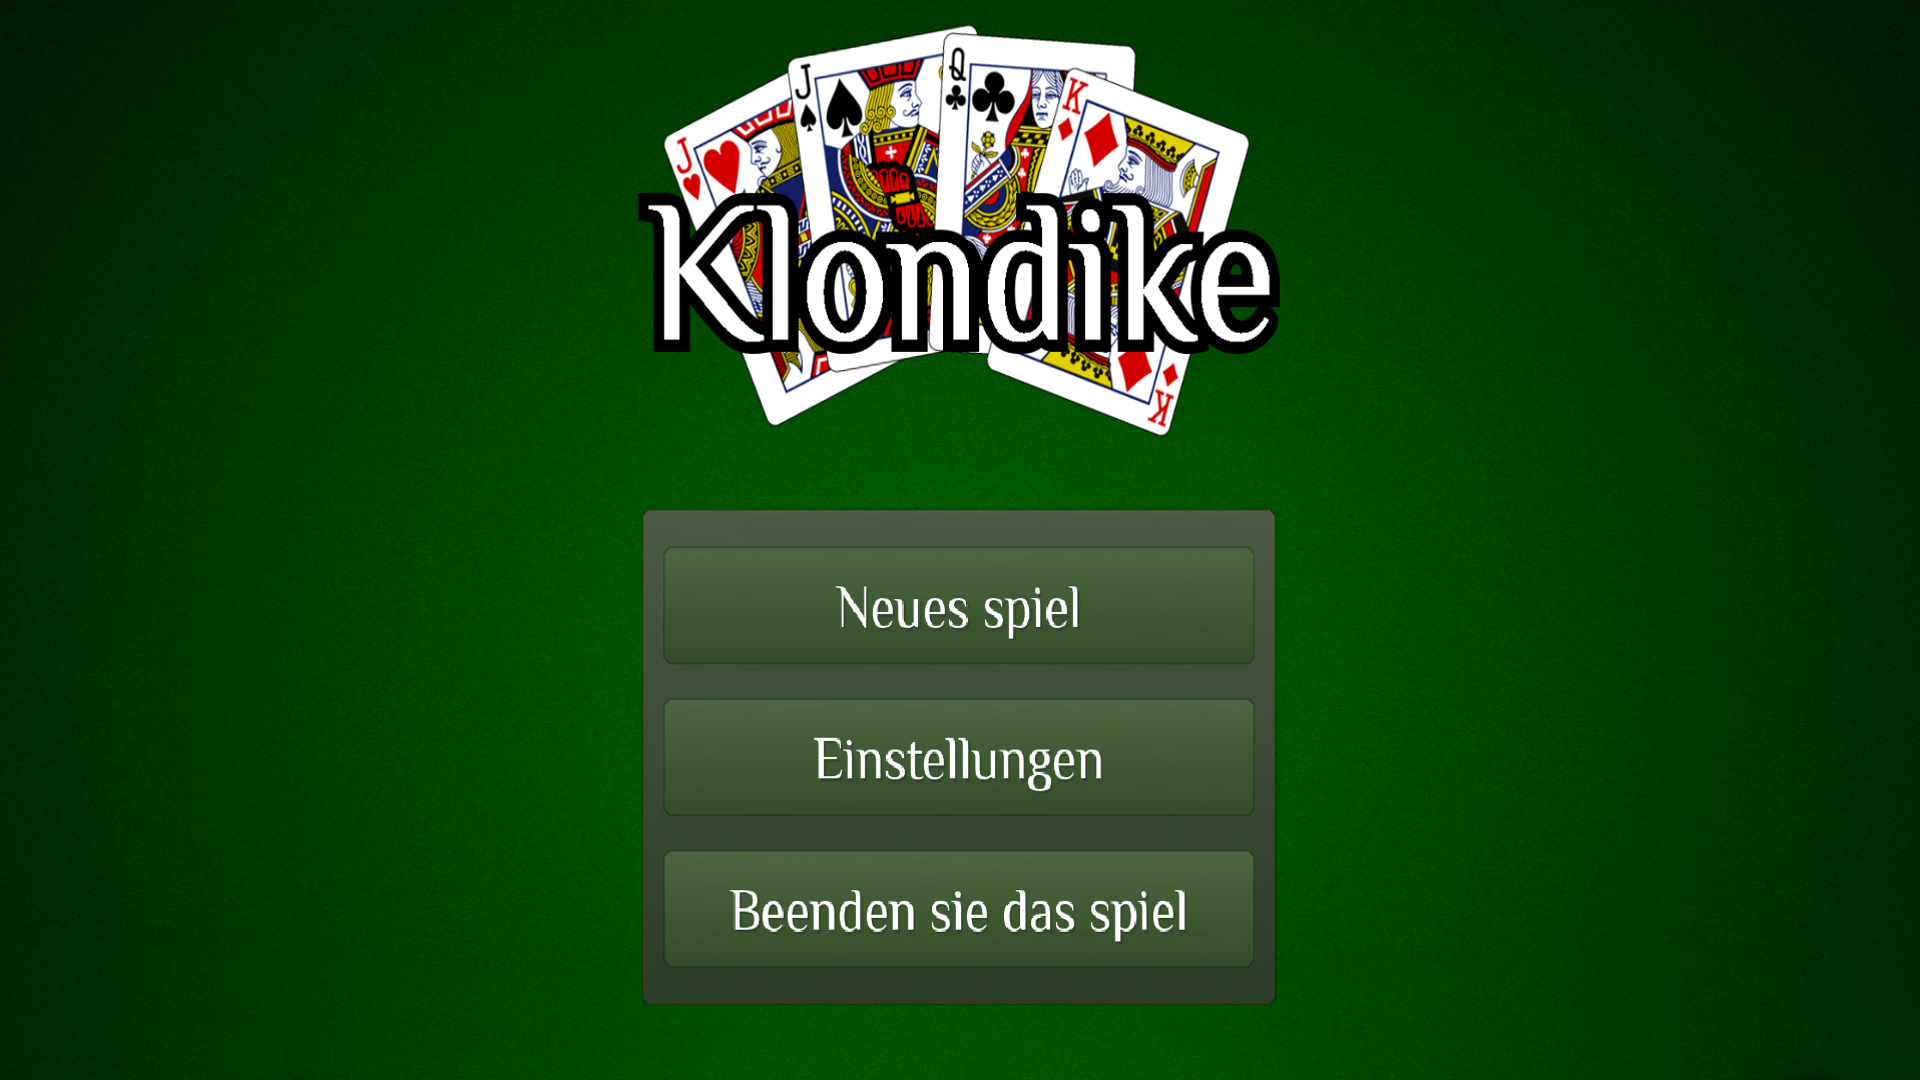 Android application Klondike Solitaire screenshort